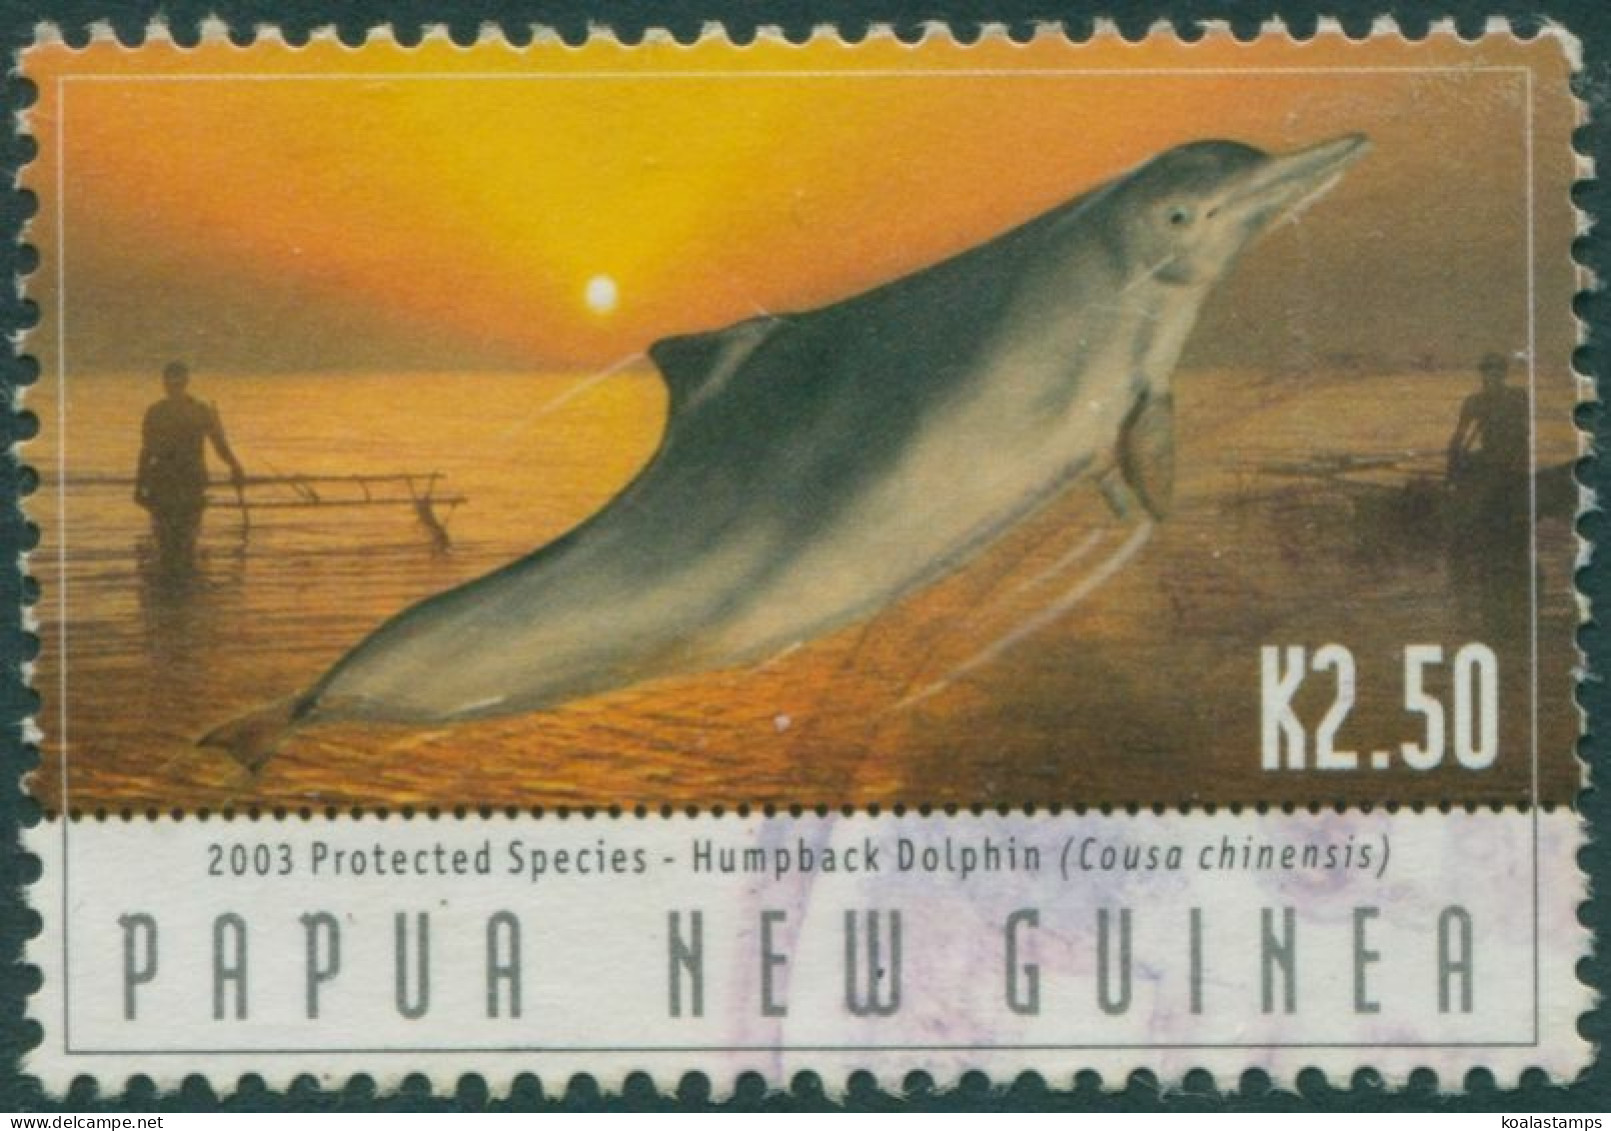 Papua New Guinea 2003 SG998 K2.50 Humpback Dolphin FU - Papua New Guinea